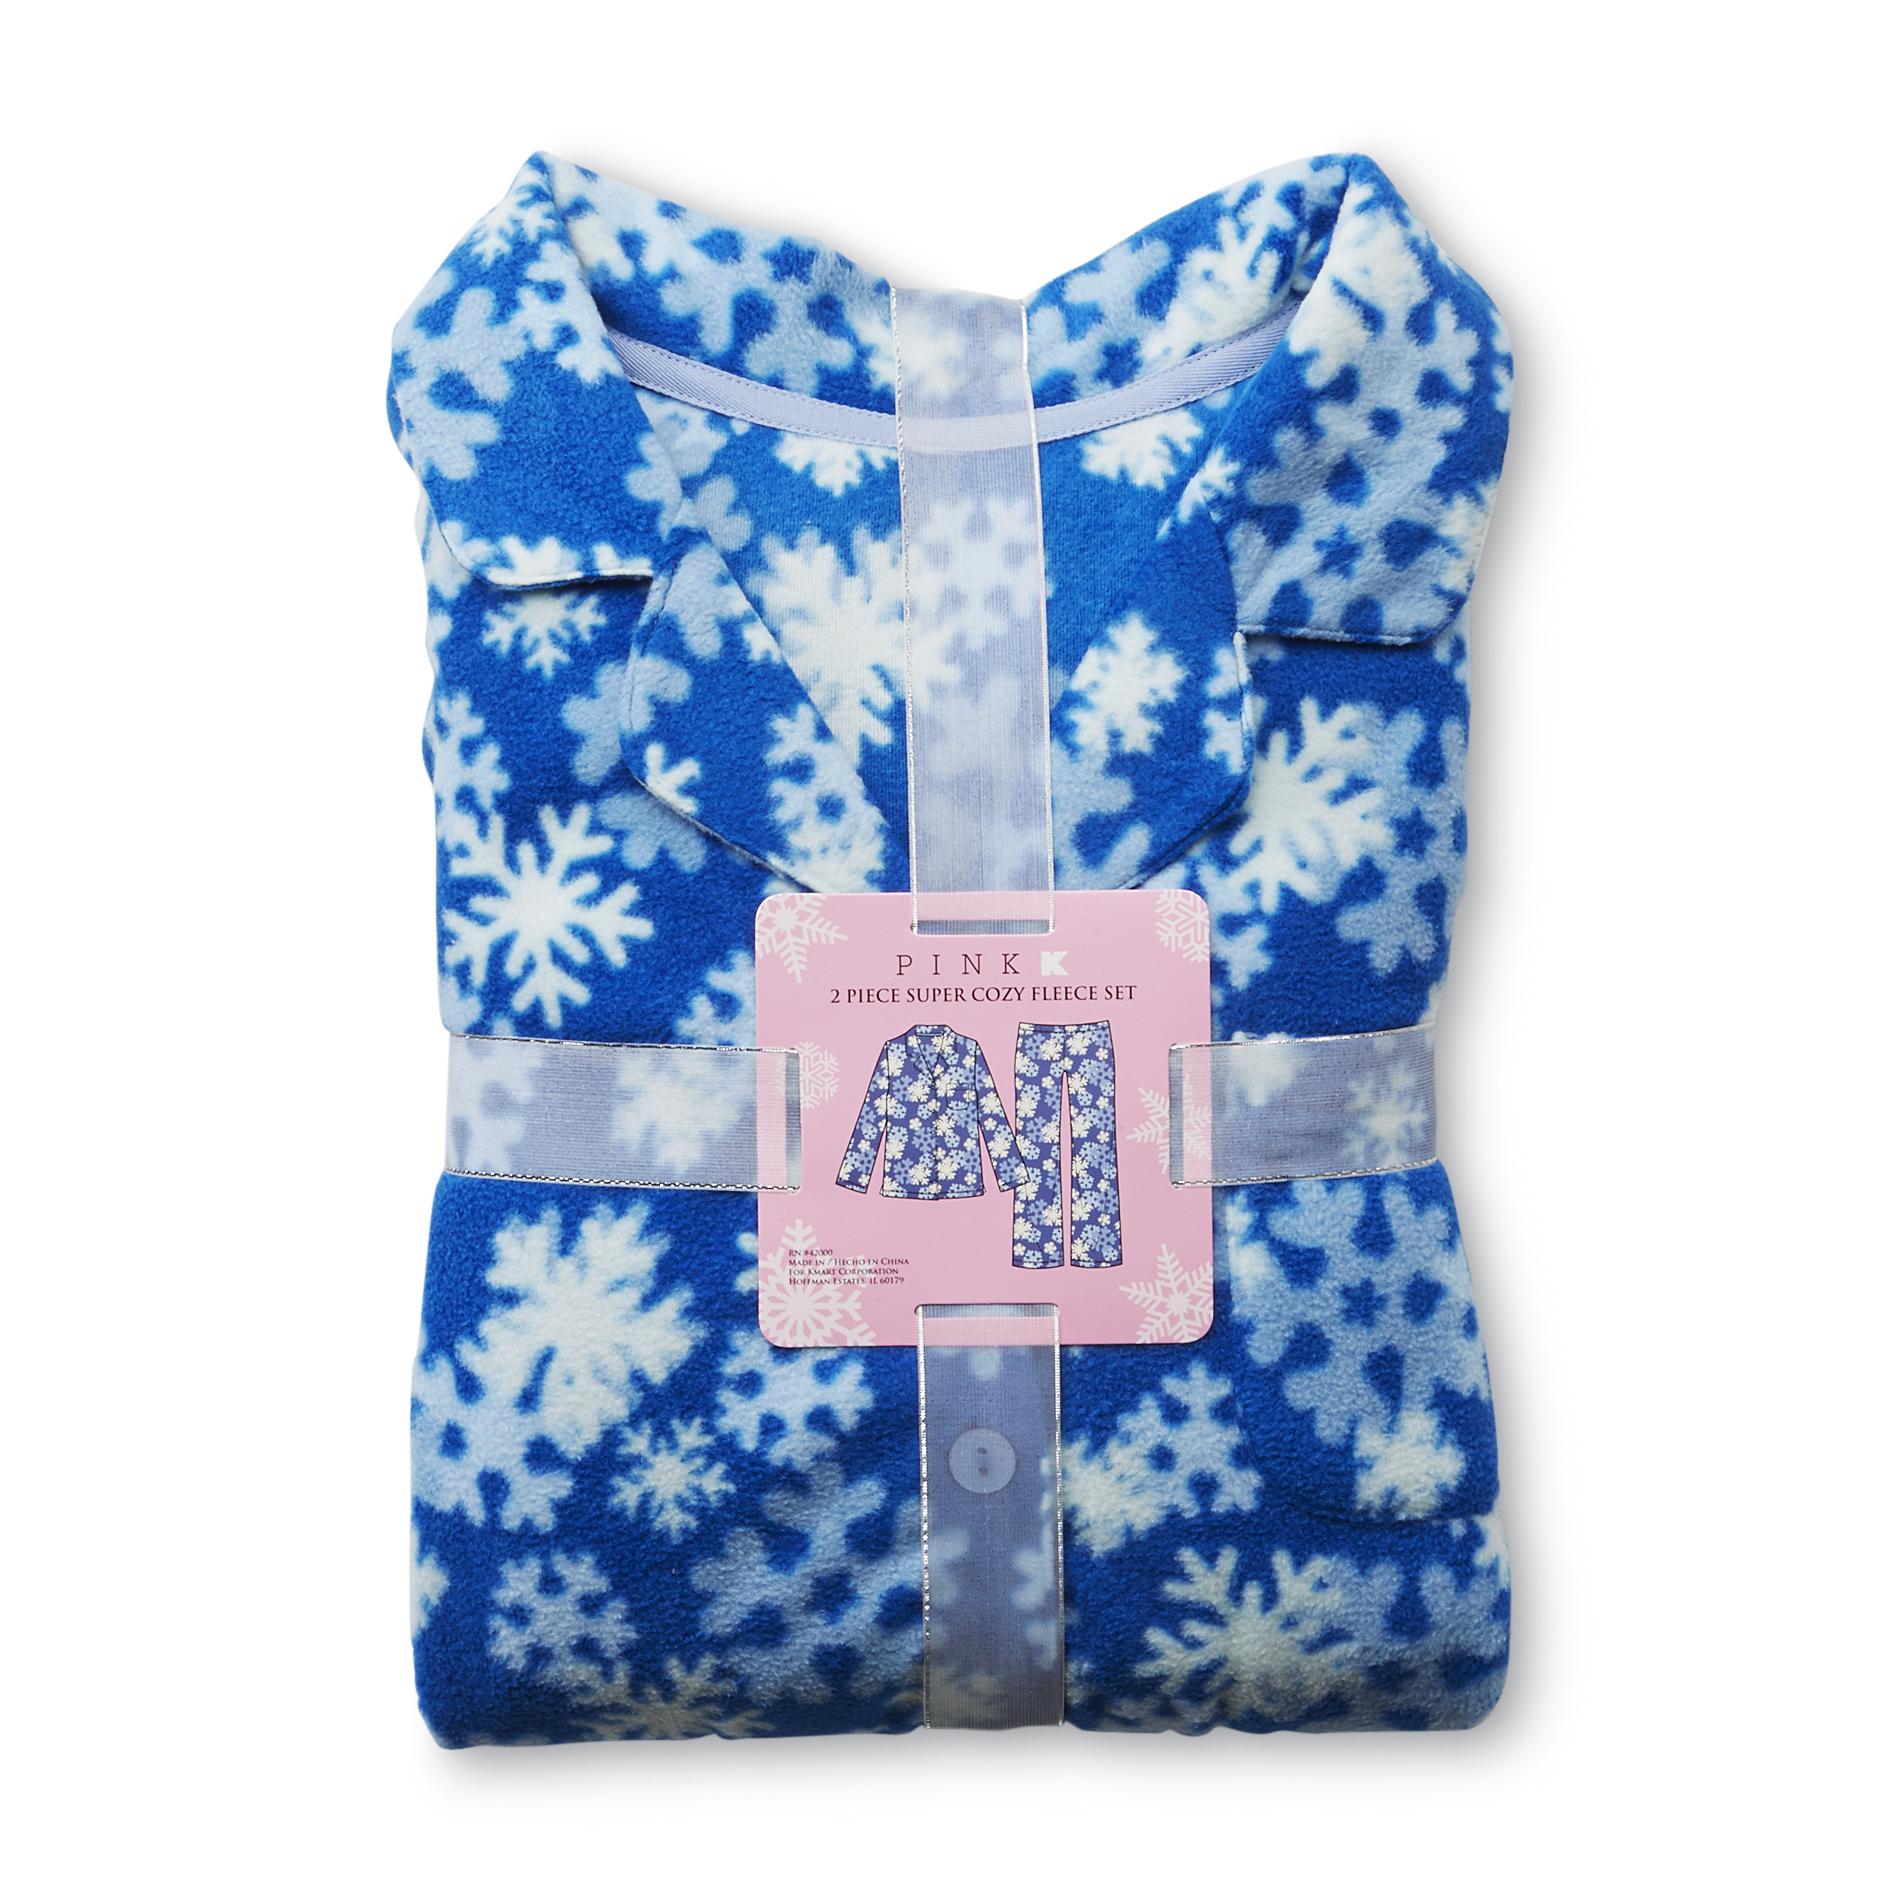 Pink K Women's Fleece Pajama Top & Pants - Snowflakes